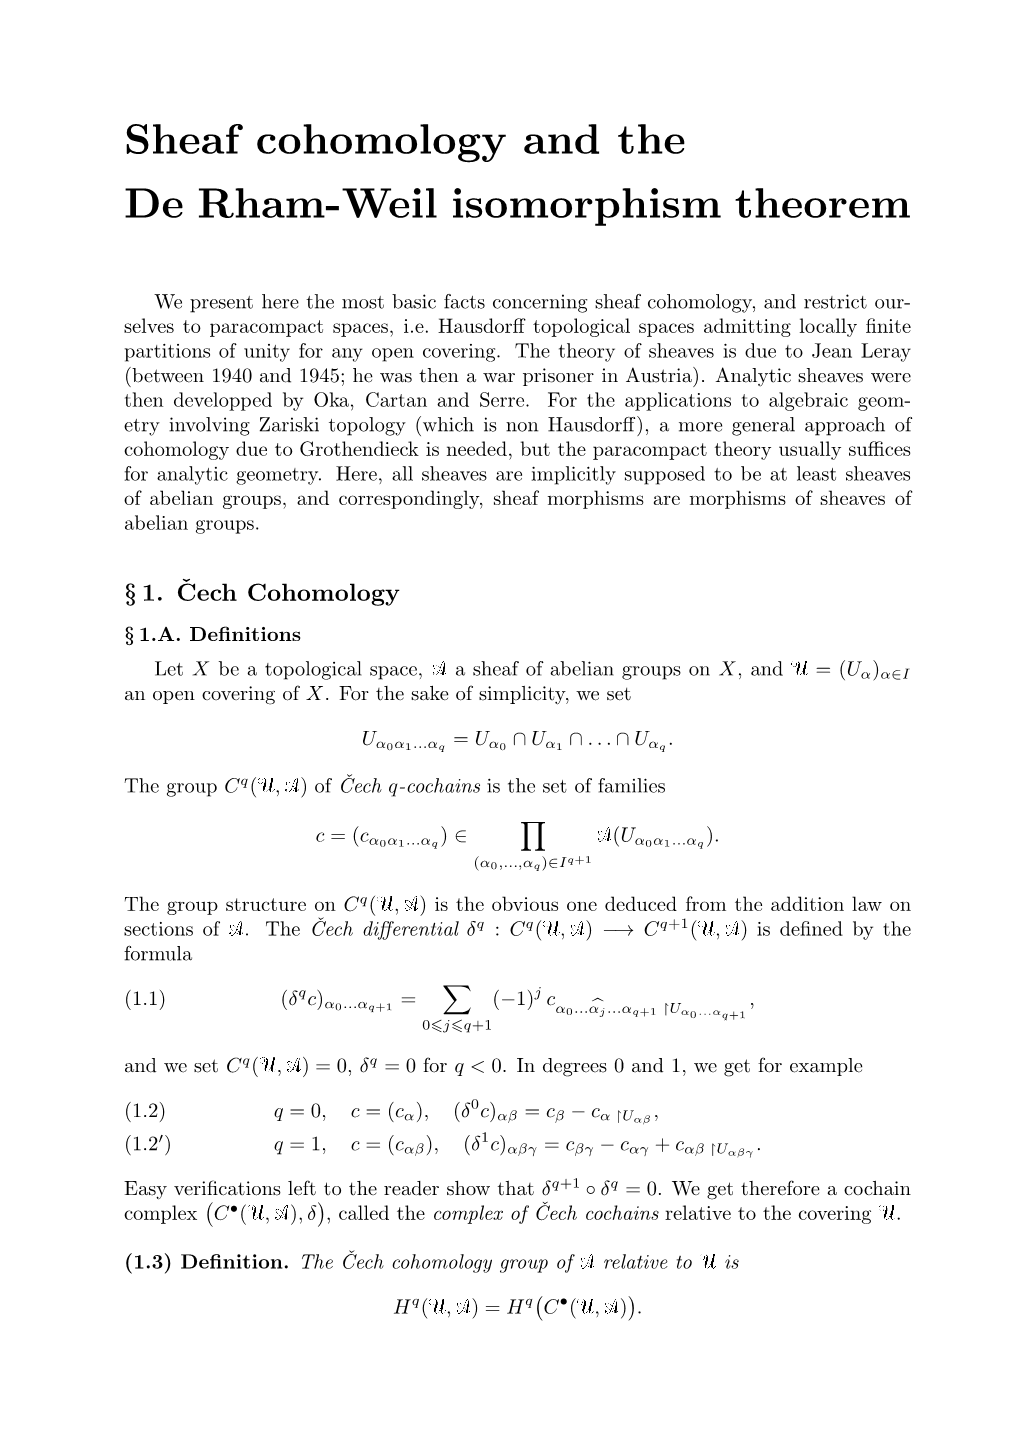 Sheaf Cohomology and the De Rham-Weil Isomorphism Theorem